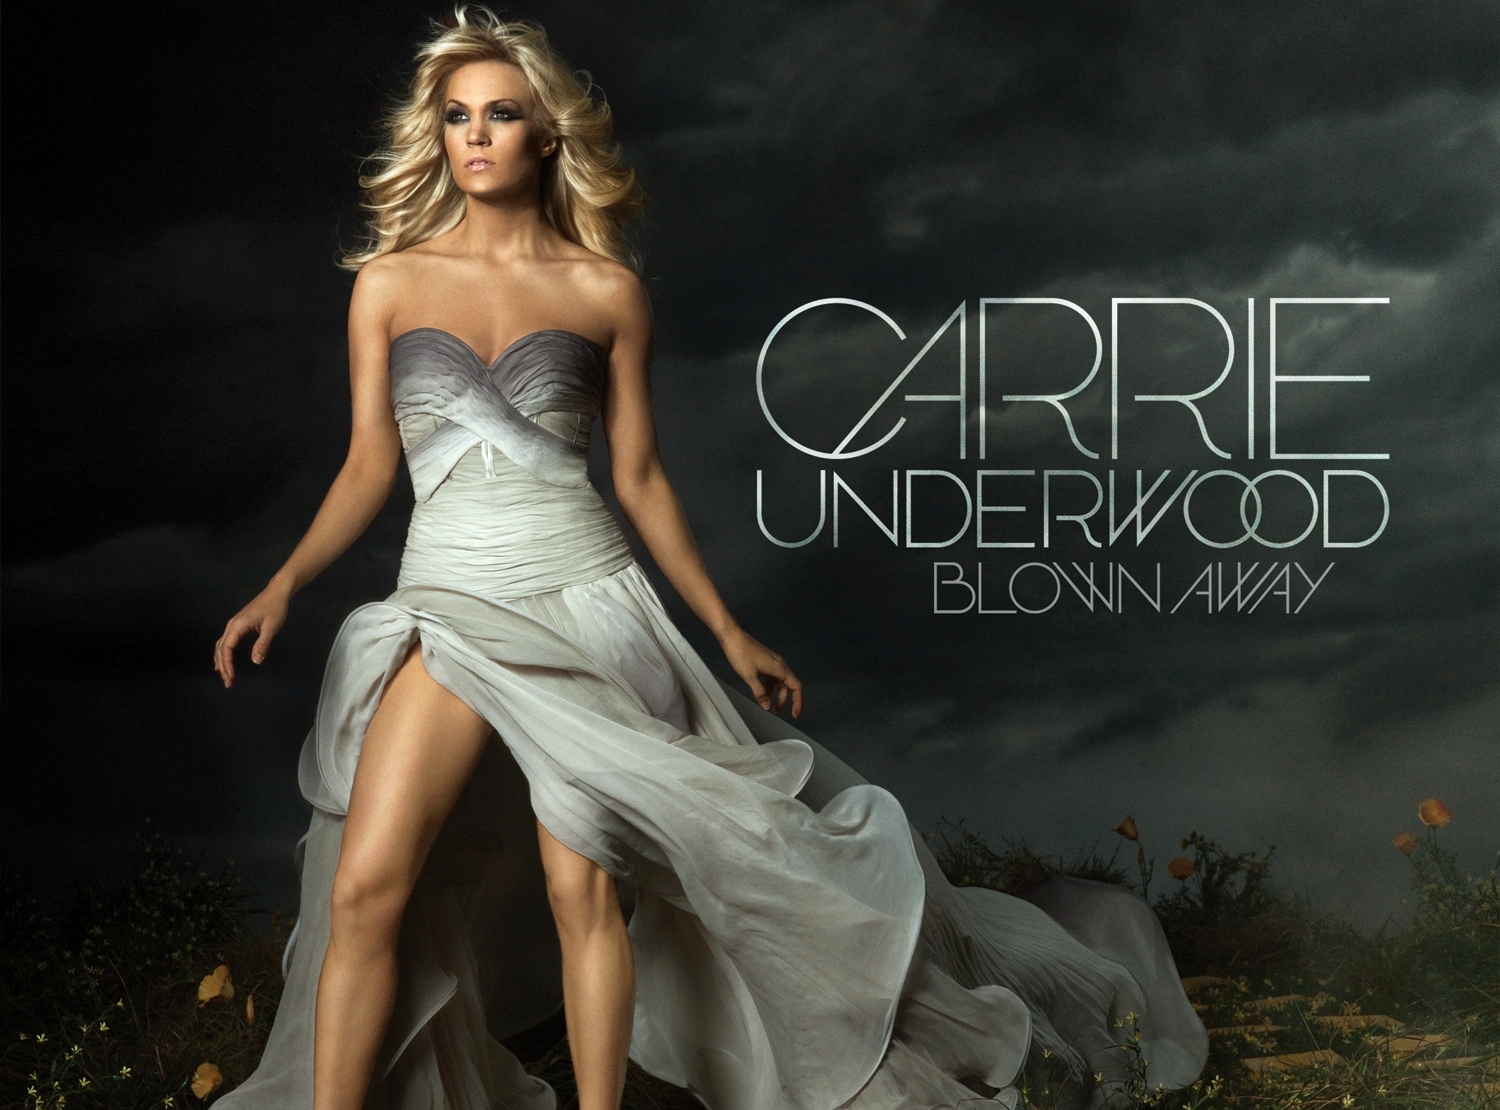 Carrie Underwood Photo: blown away.